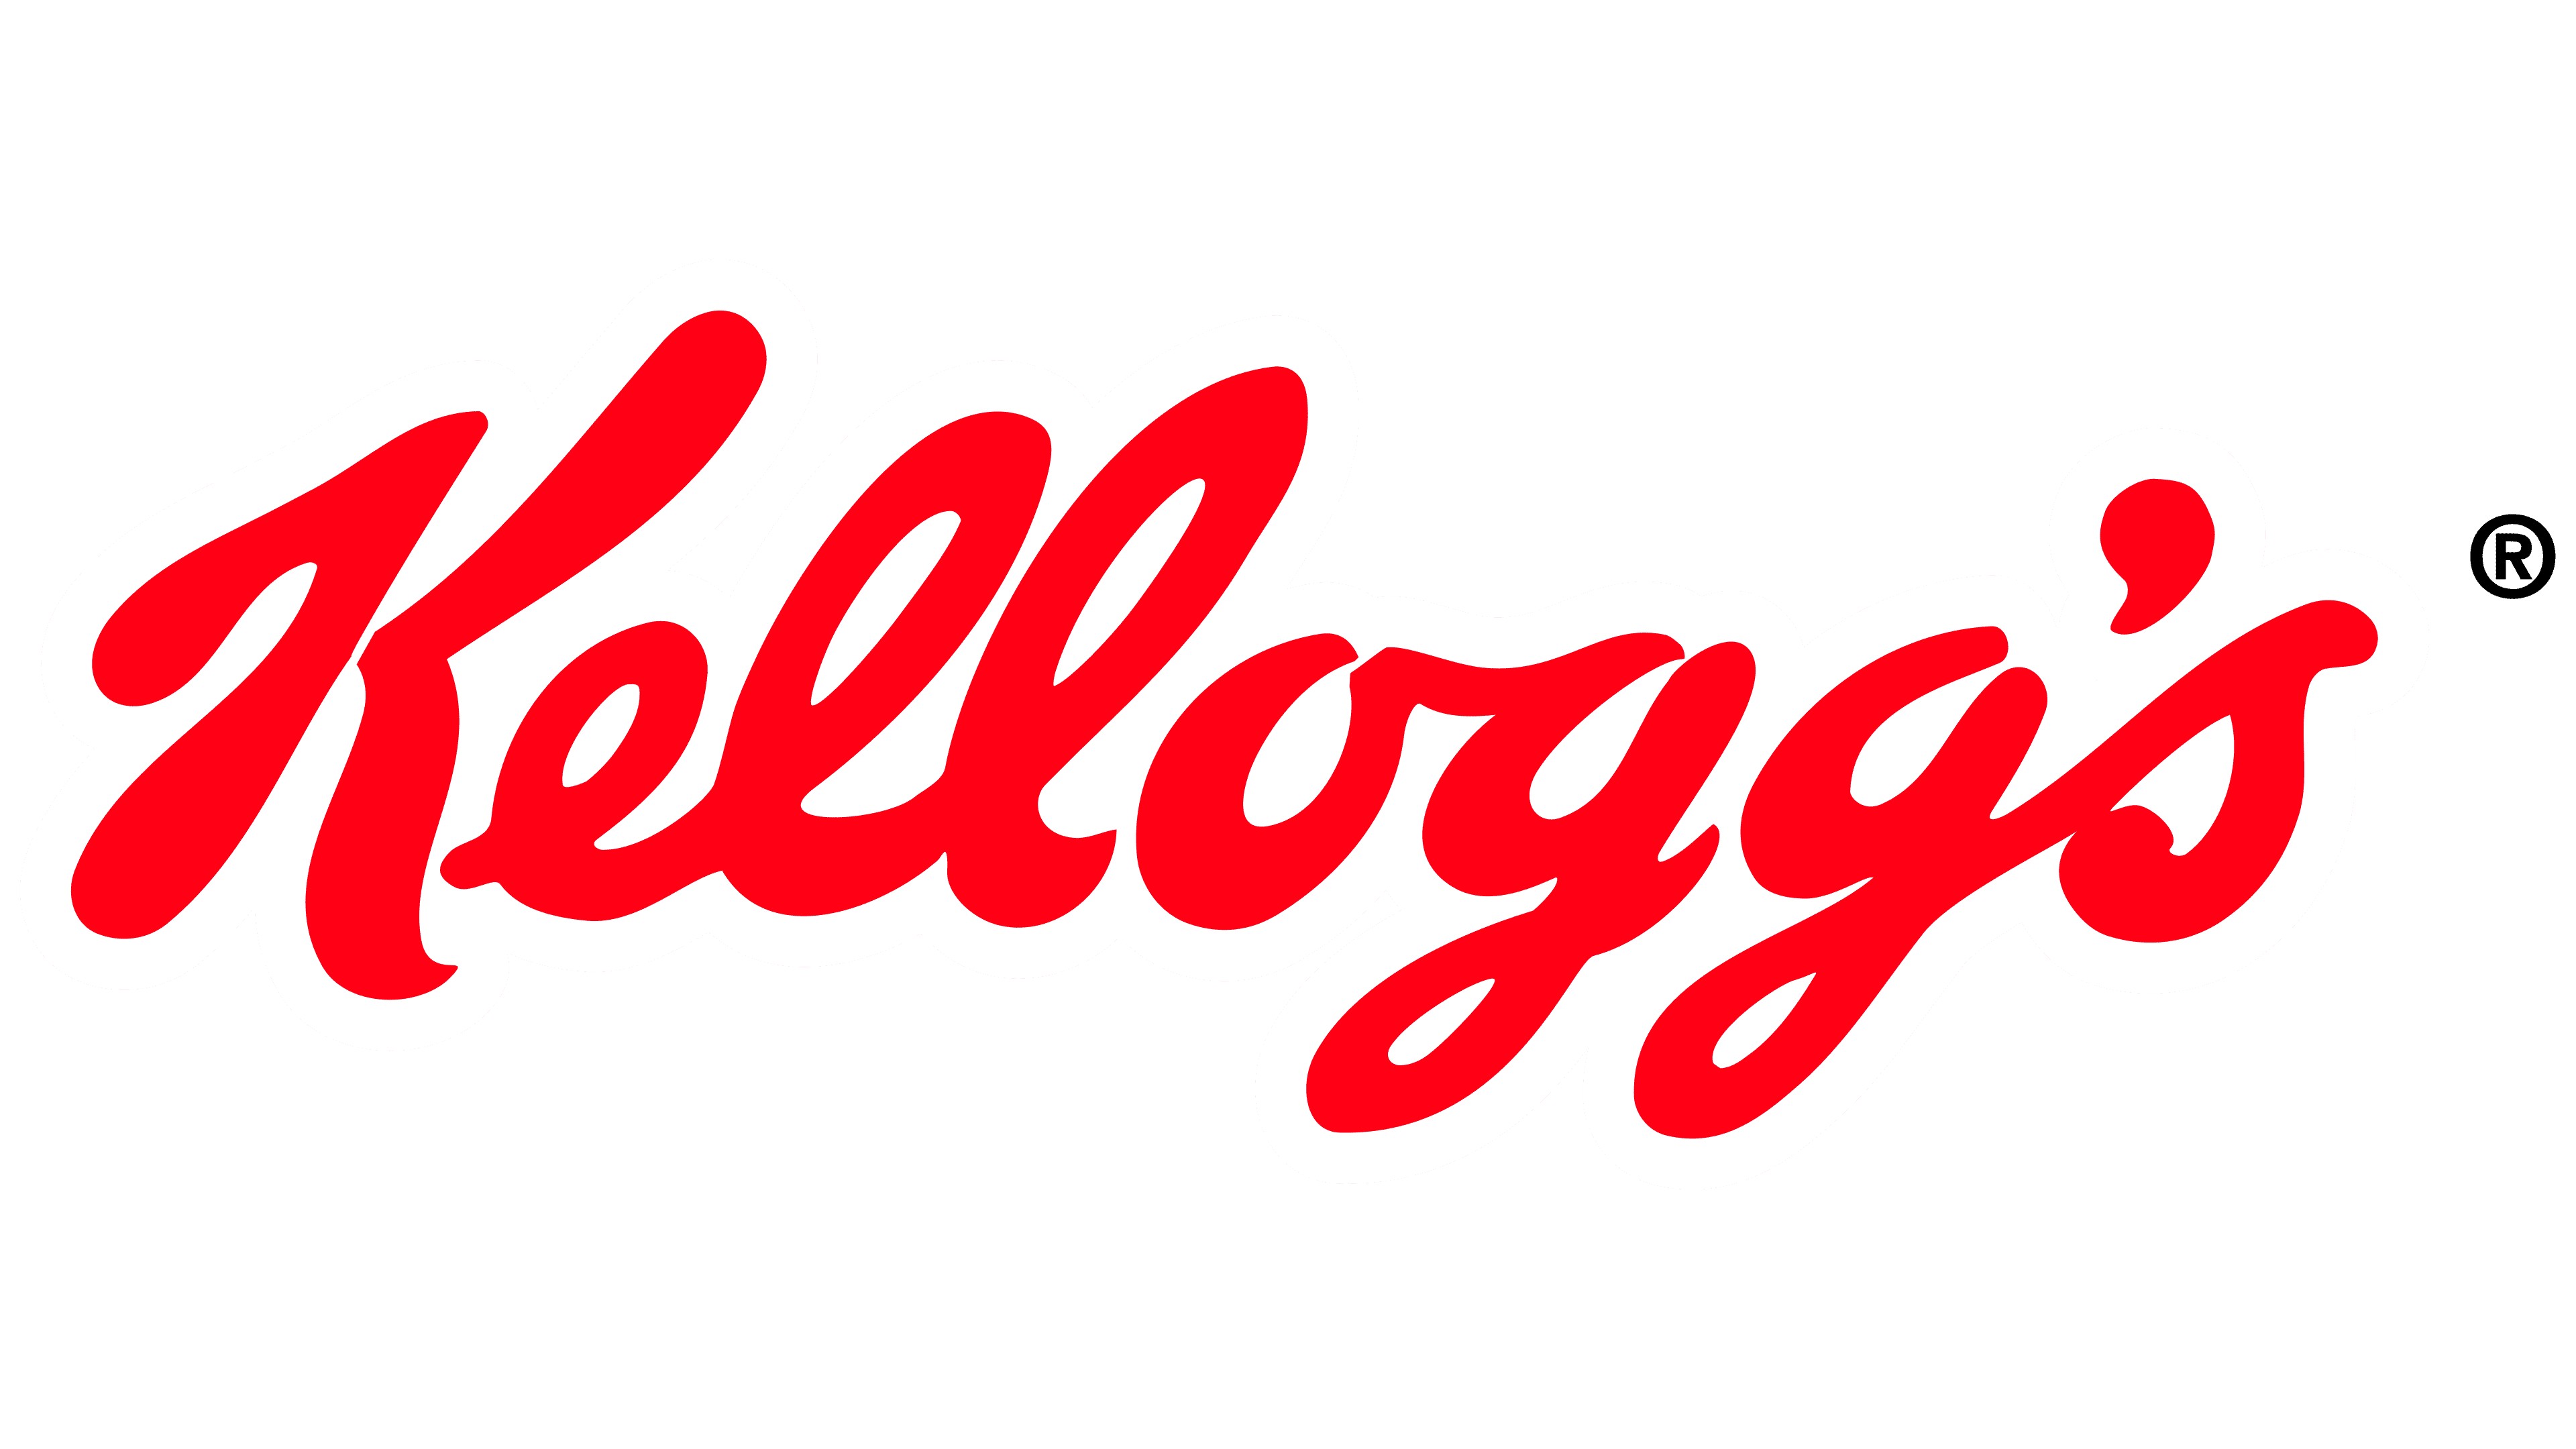 KELLOGG'S Kellogg's trésor choco roulette 650g pas cher 